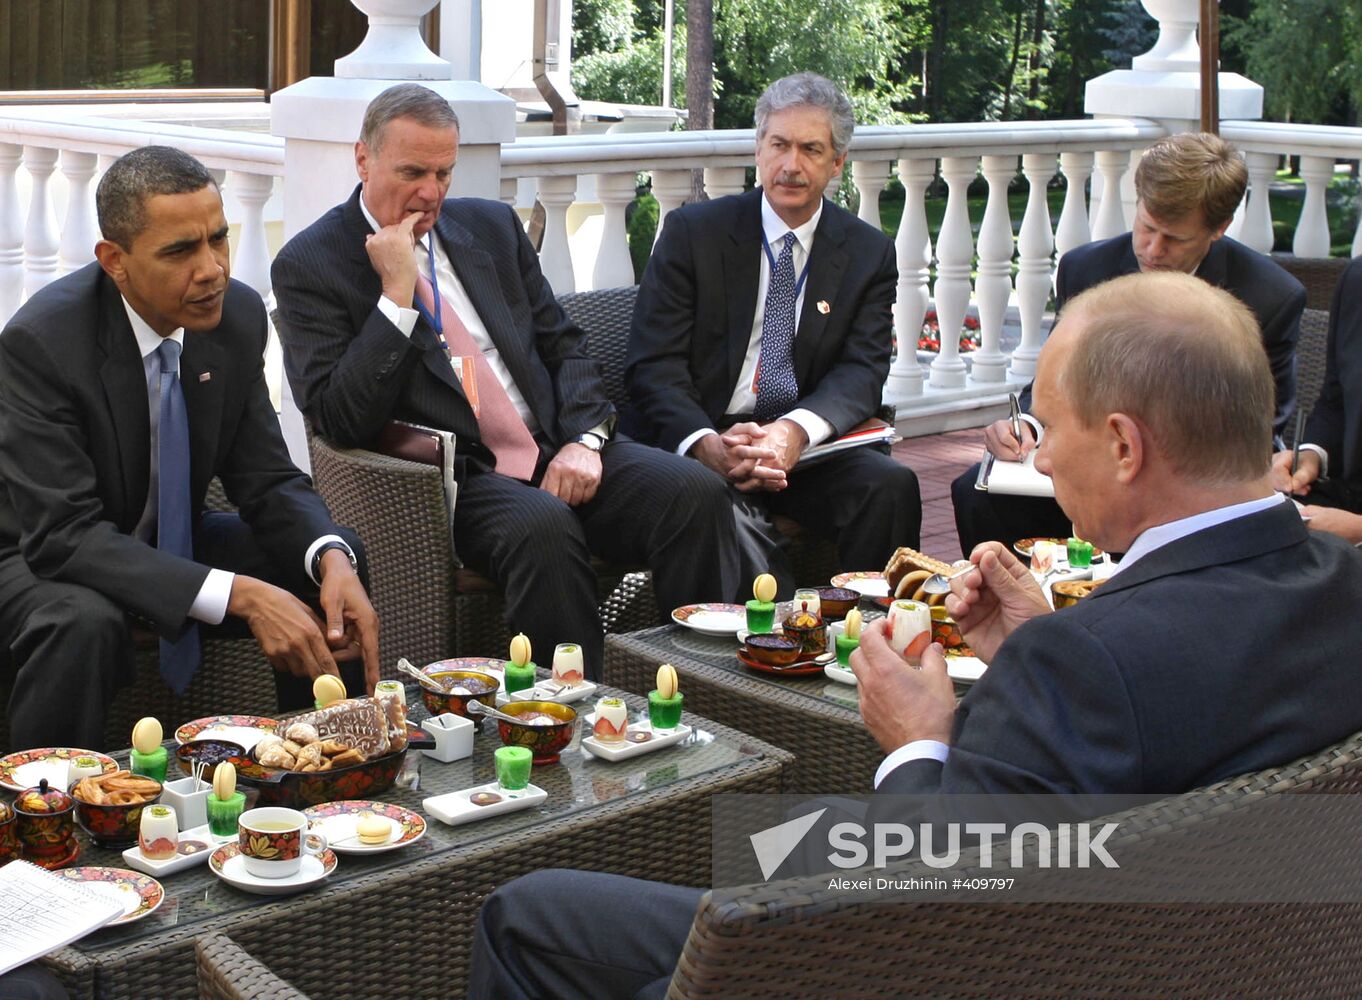 U.S. President Barack Obama meets with Vladimir Putin